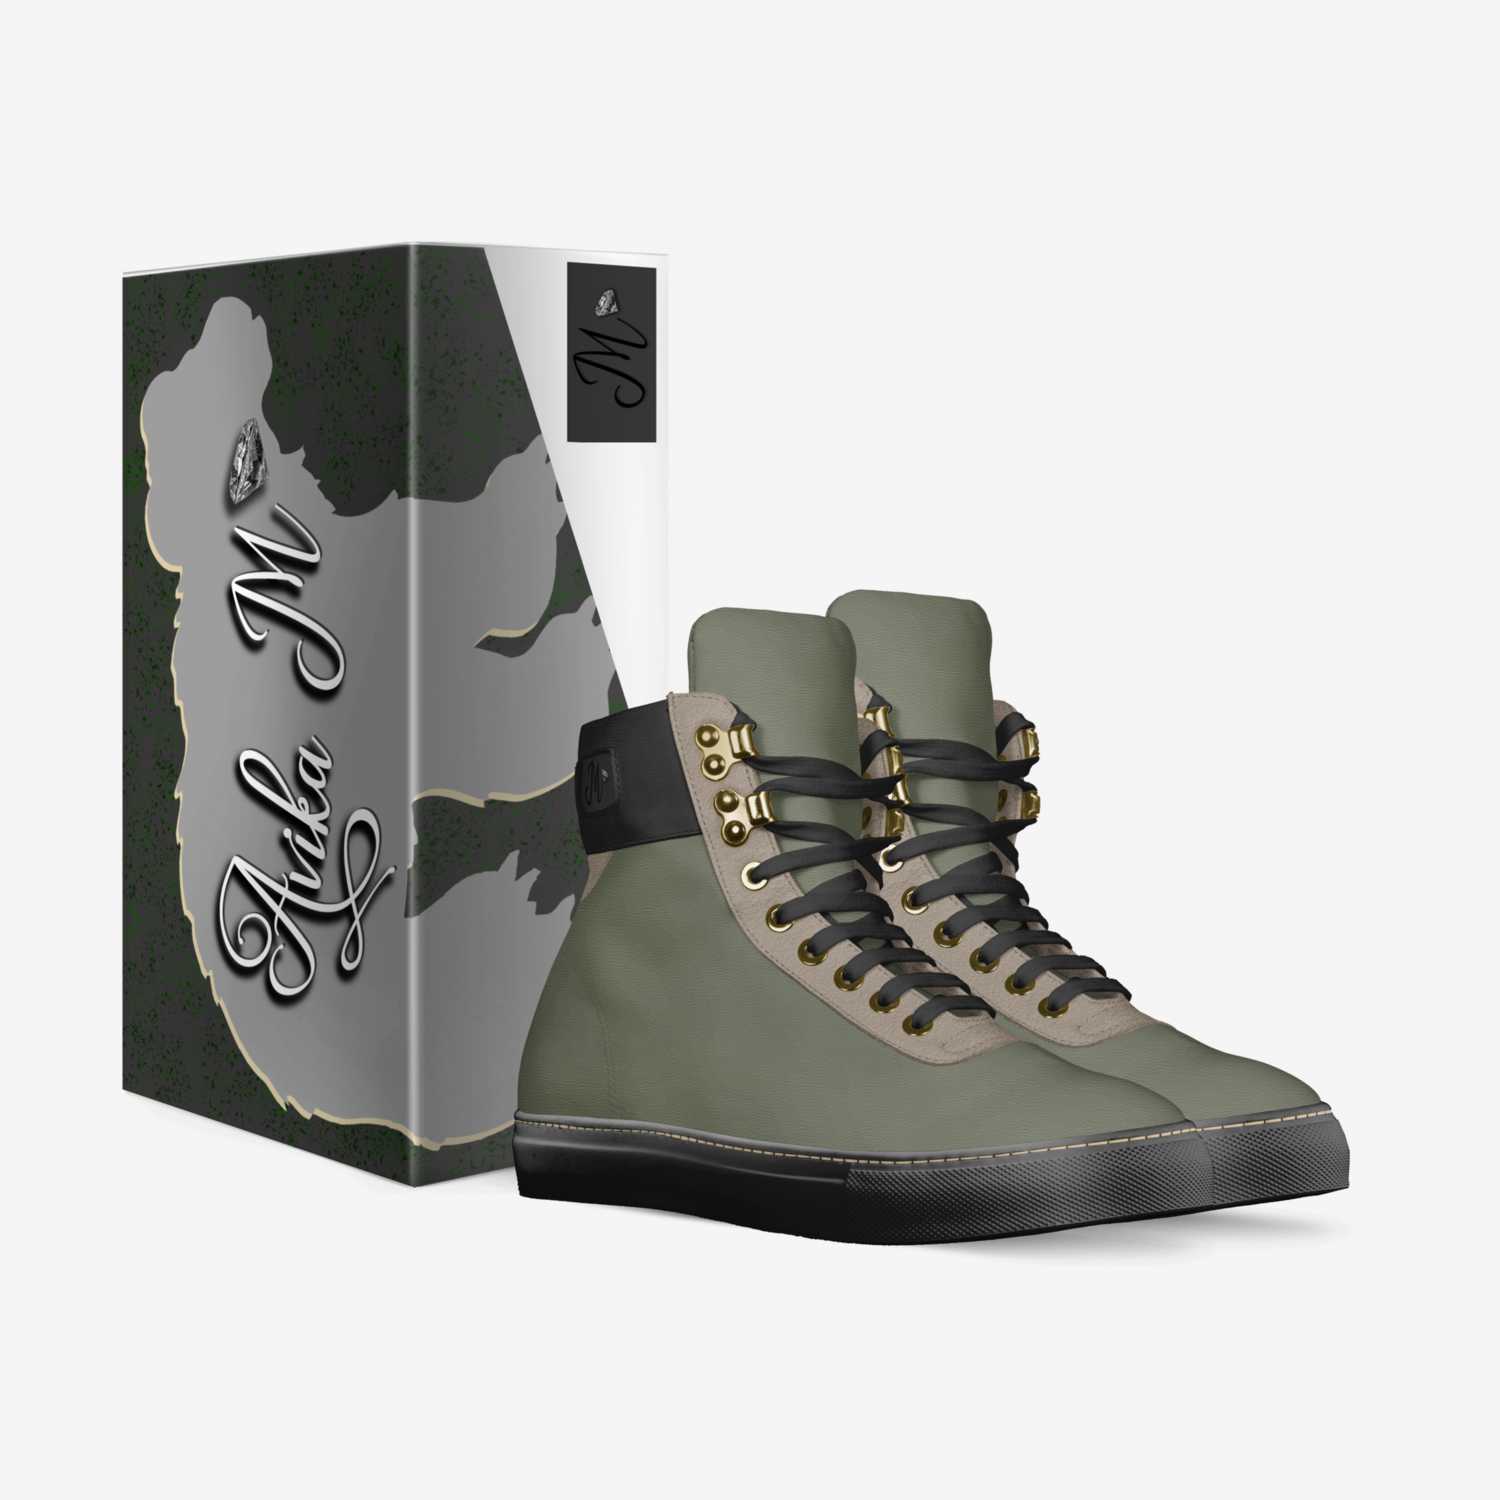 D'Bear  custom made in Italy shoes by Avika Moreno | Box view